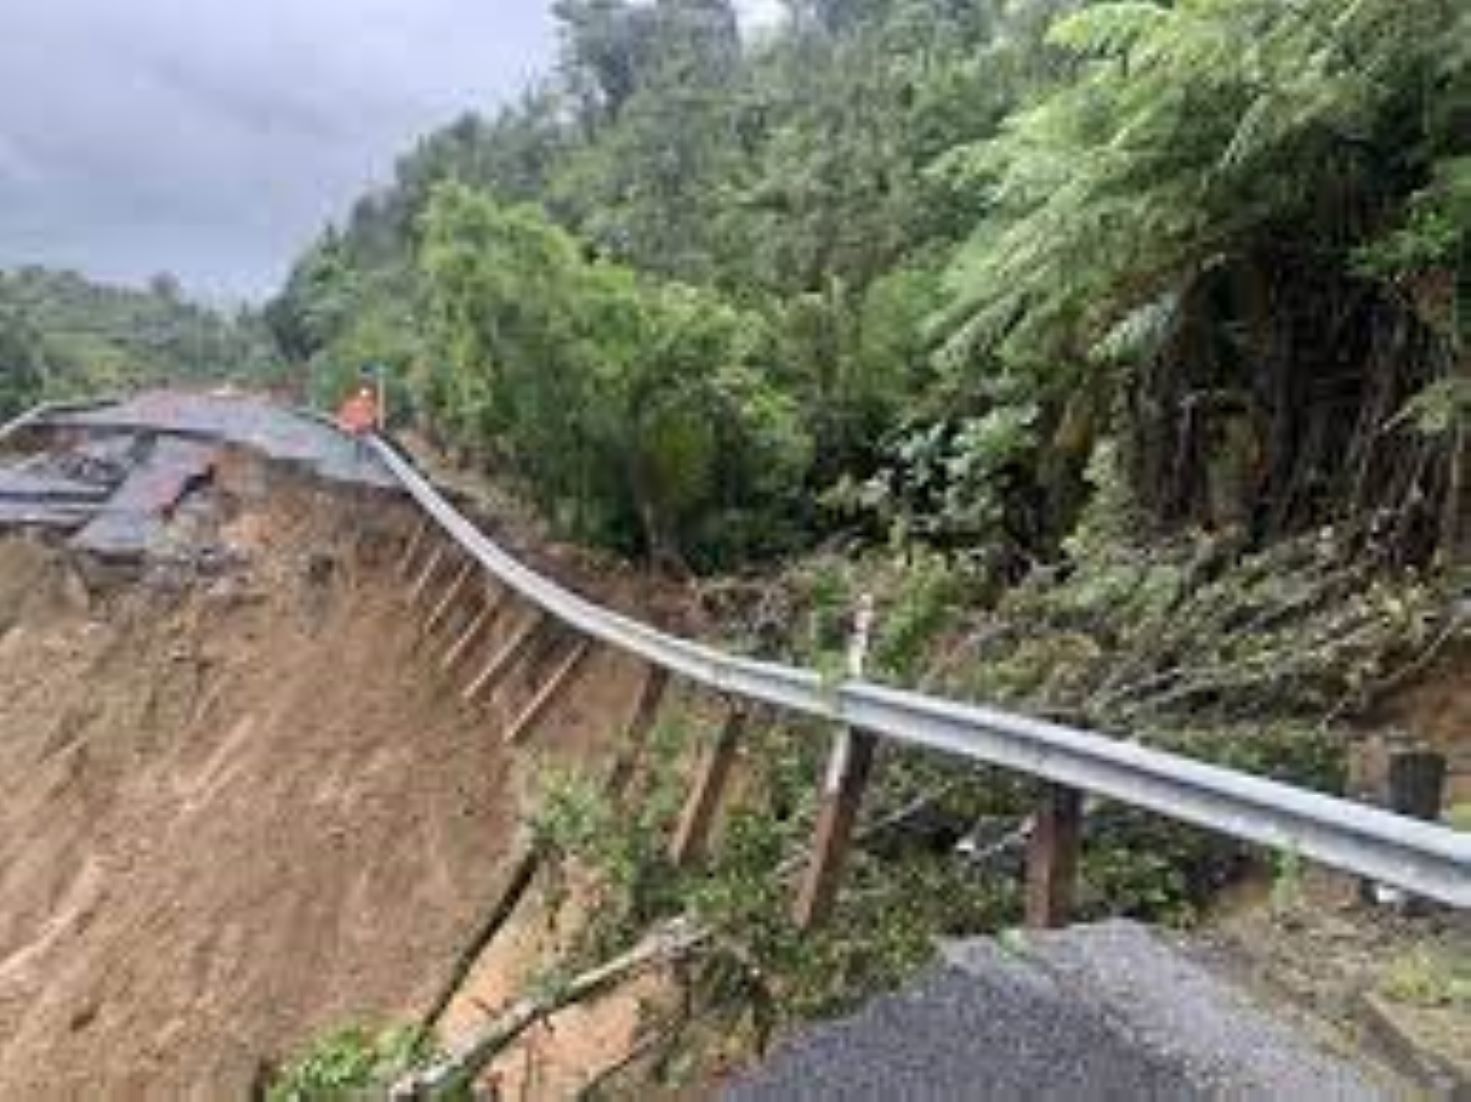 New Zealand To Spend One Billion NZD On Flood, Cyclone Recovery